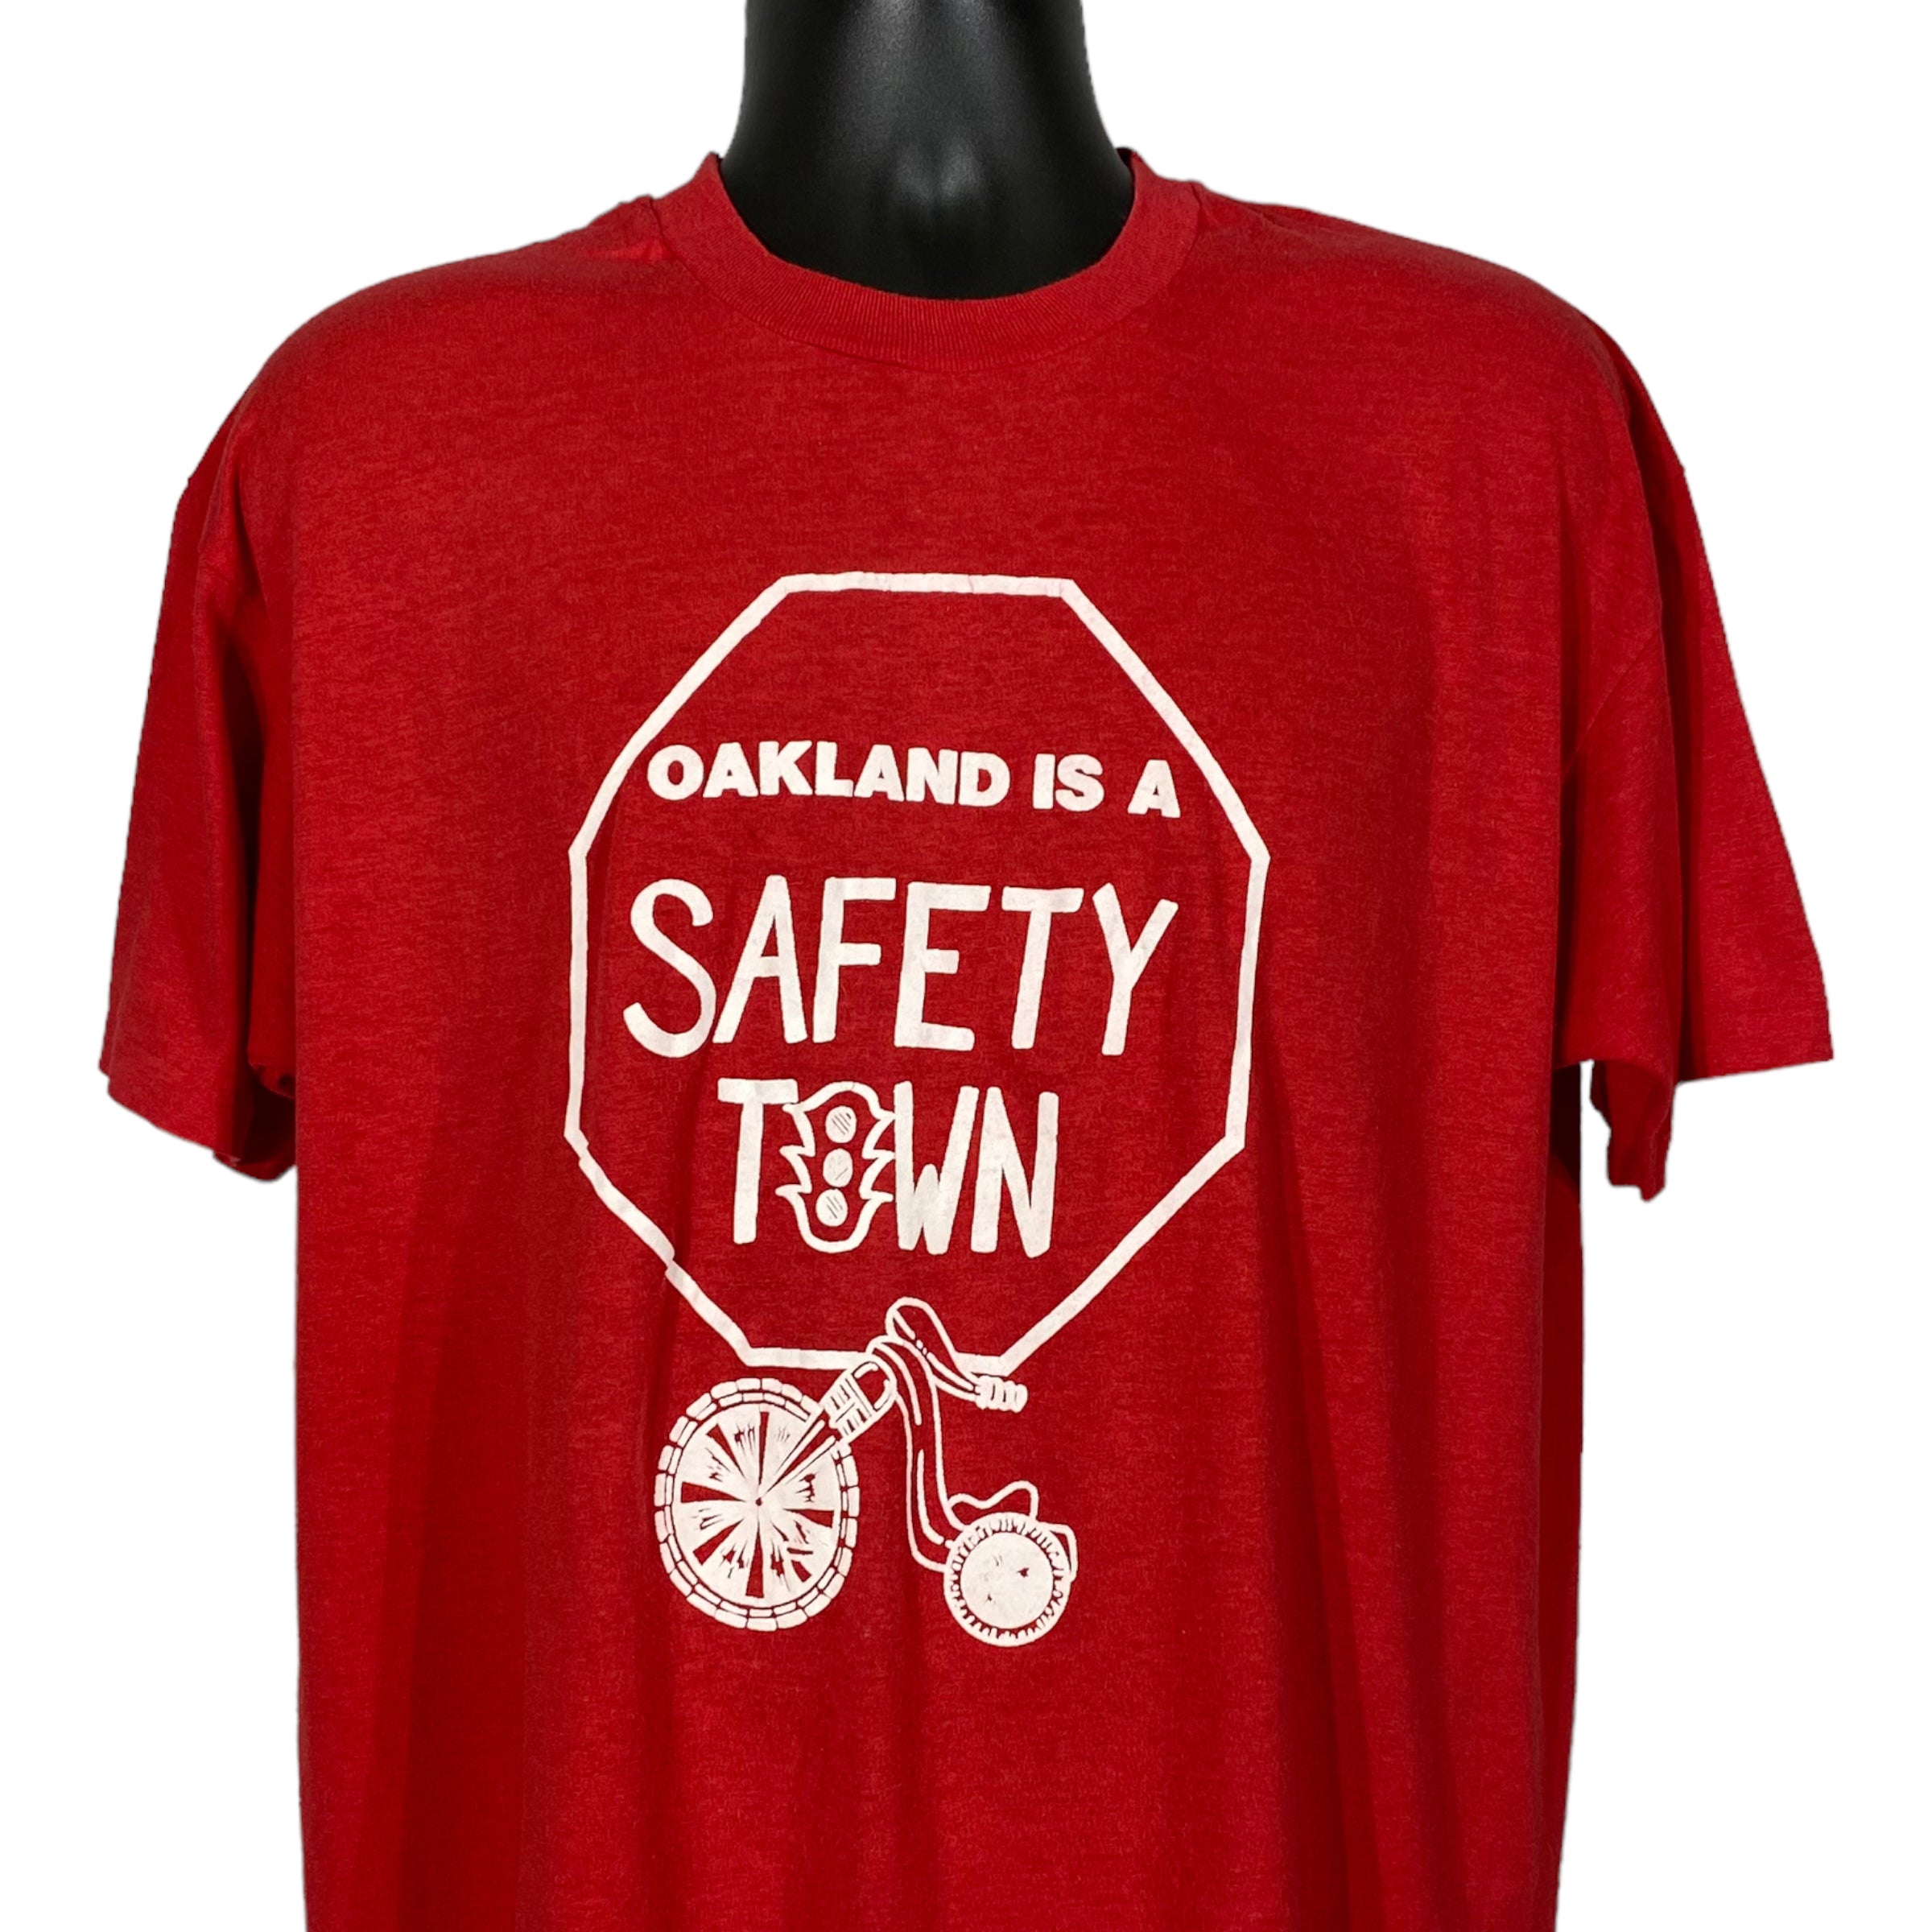 Vintage Oakland California Safety Tee 90s